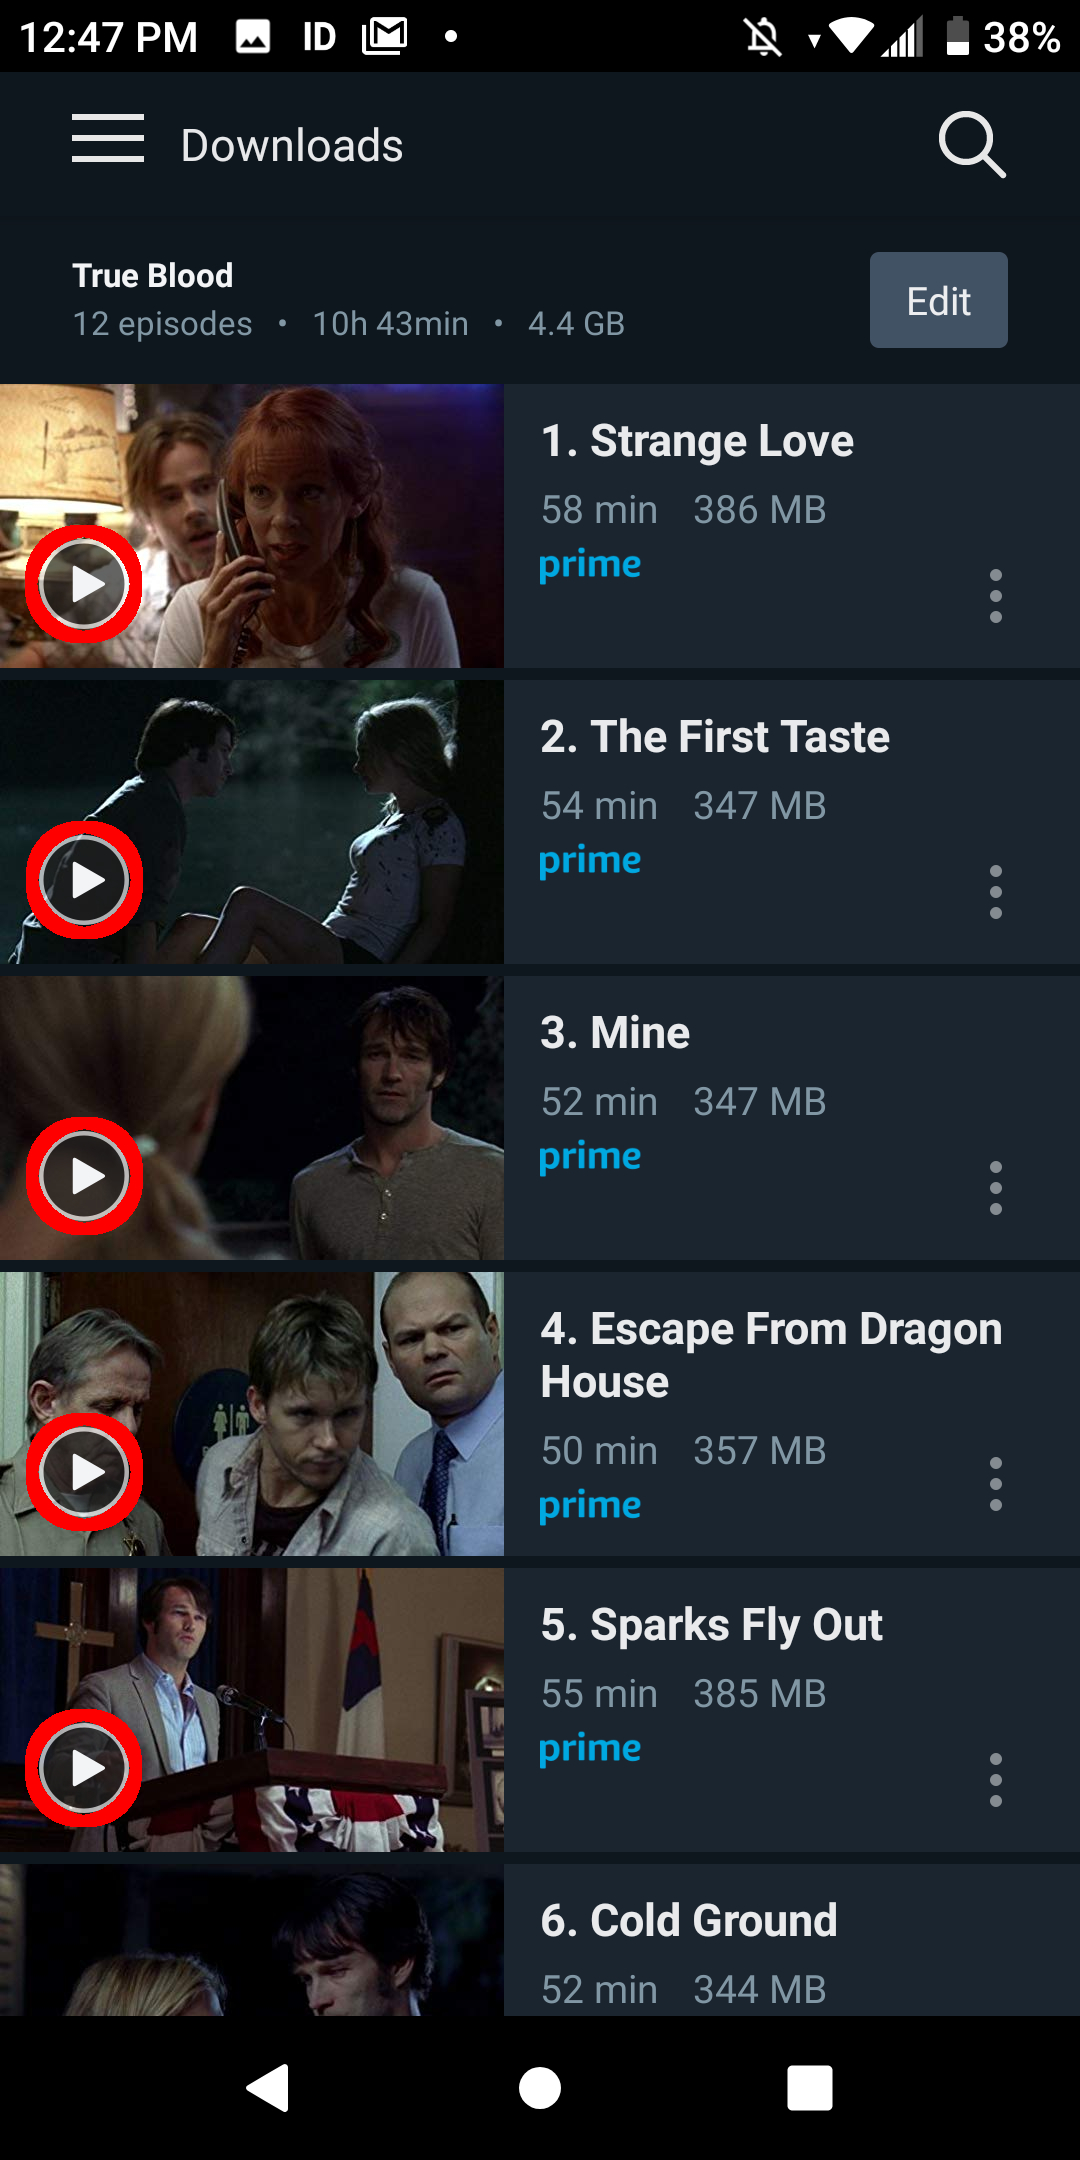 Amazon Prime Android Home Screen Menu